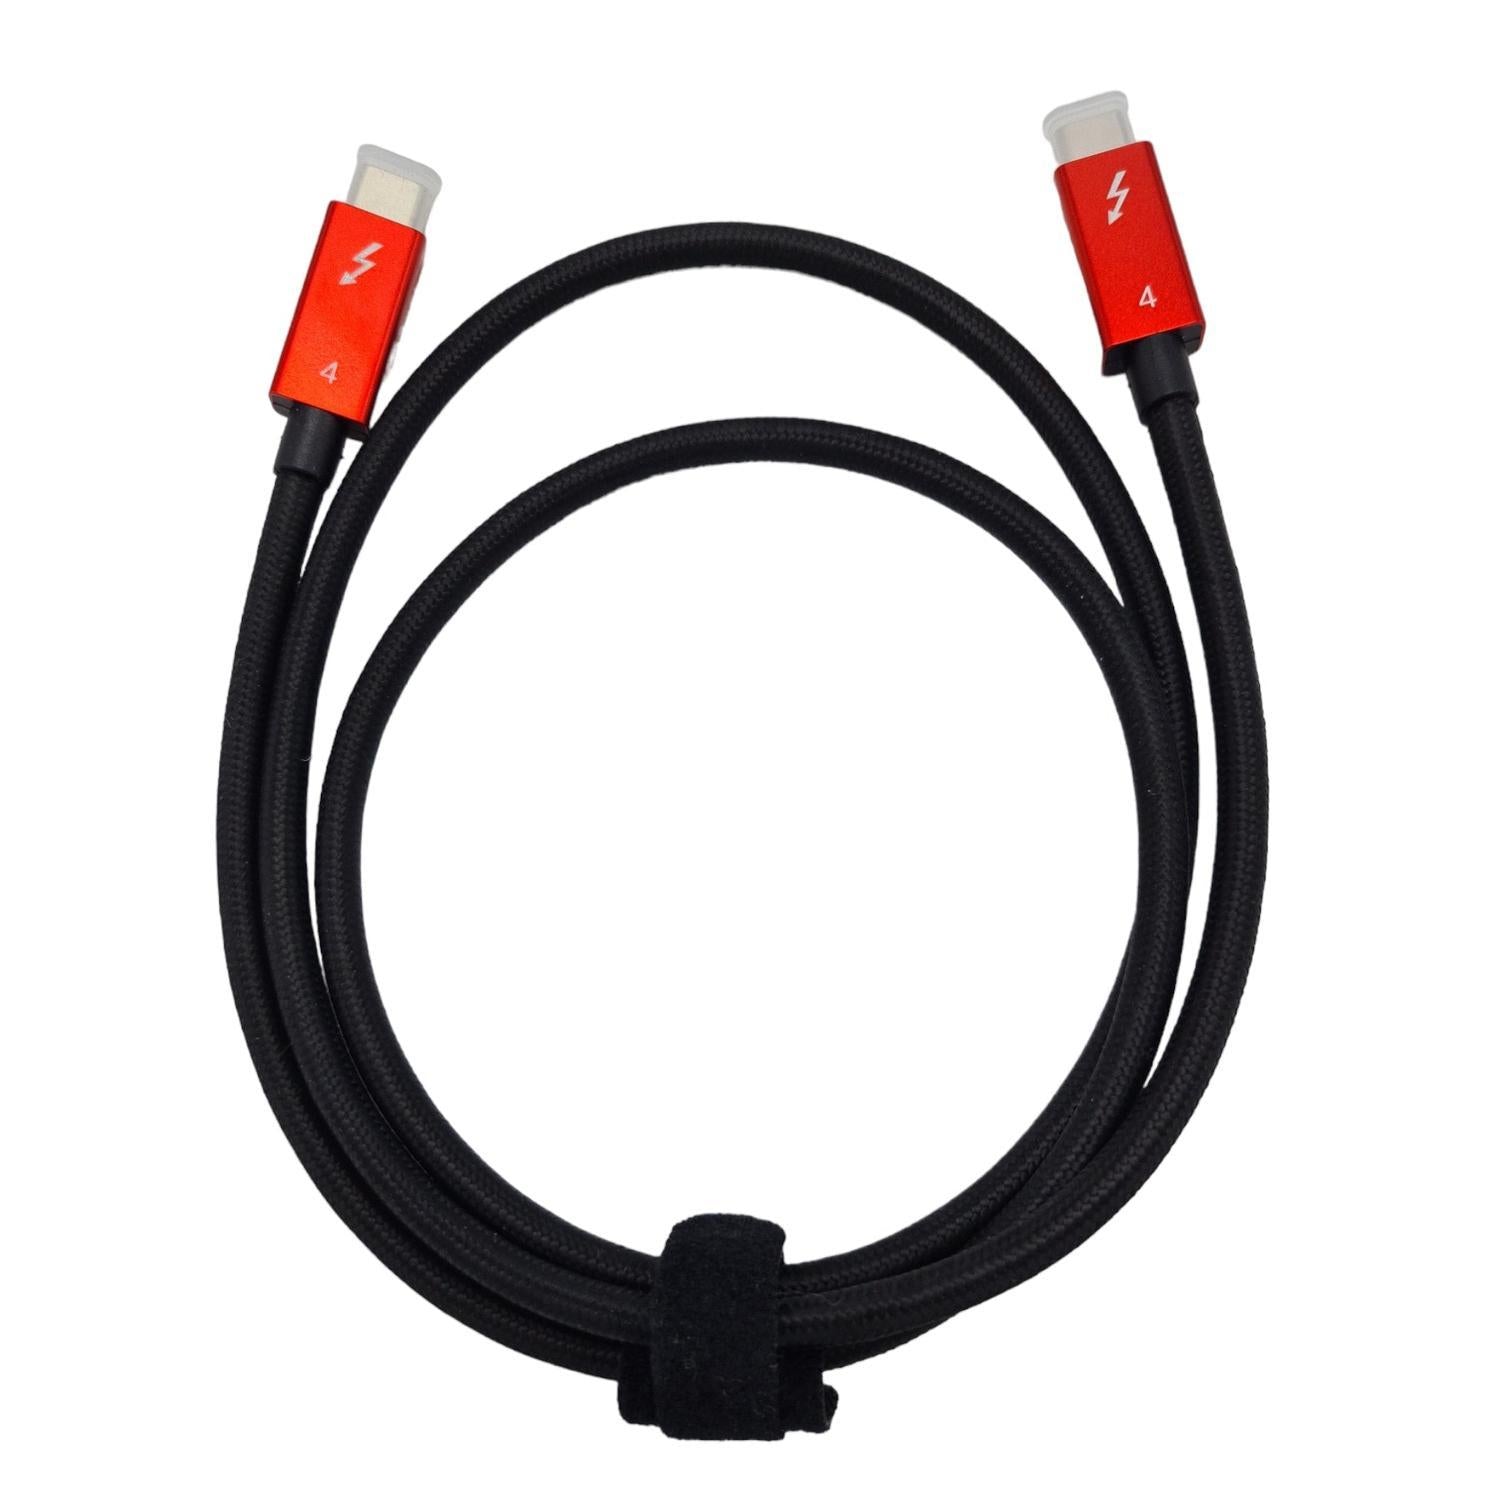 NÖRDIC 1m Thunderbolt 4 USB-C kabel 40Gbps 100W lading 8K video kompatibel med USB 4 og Thunderbolt 3